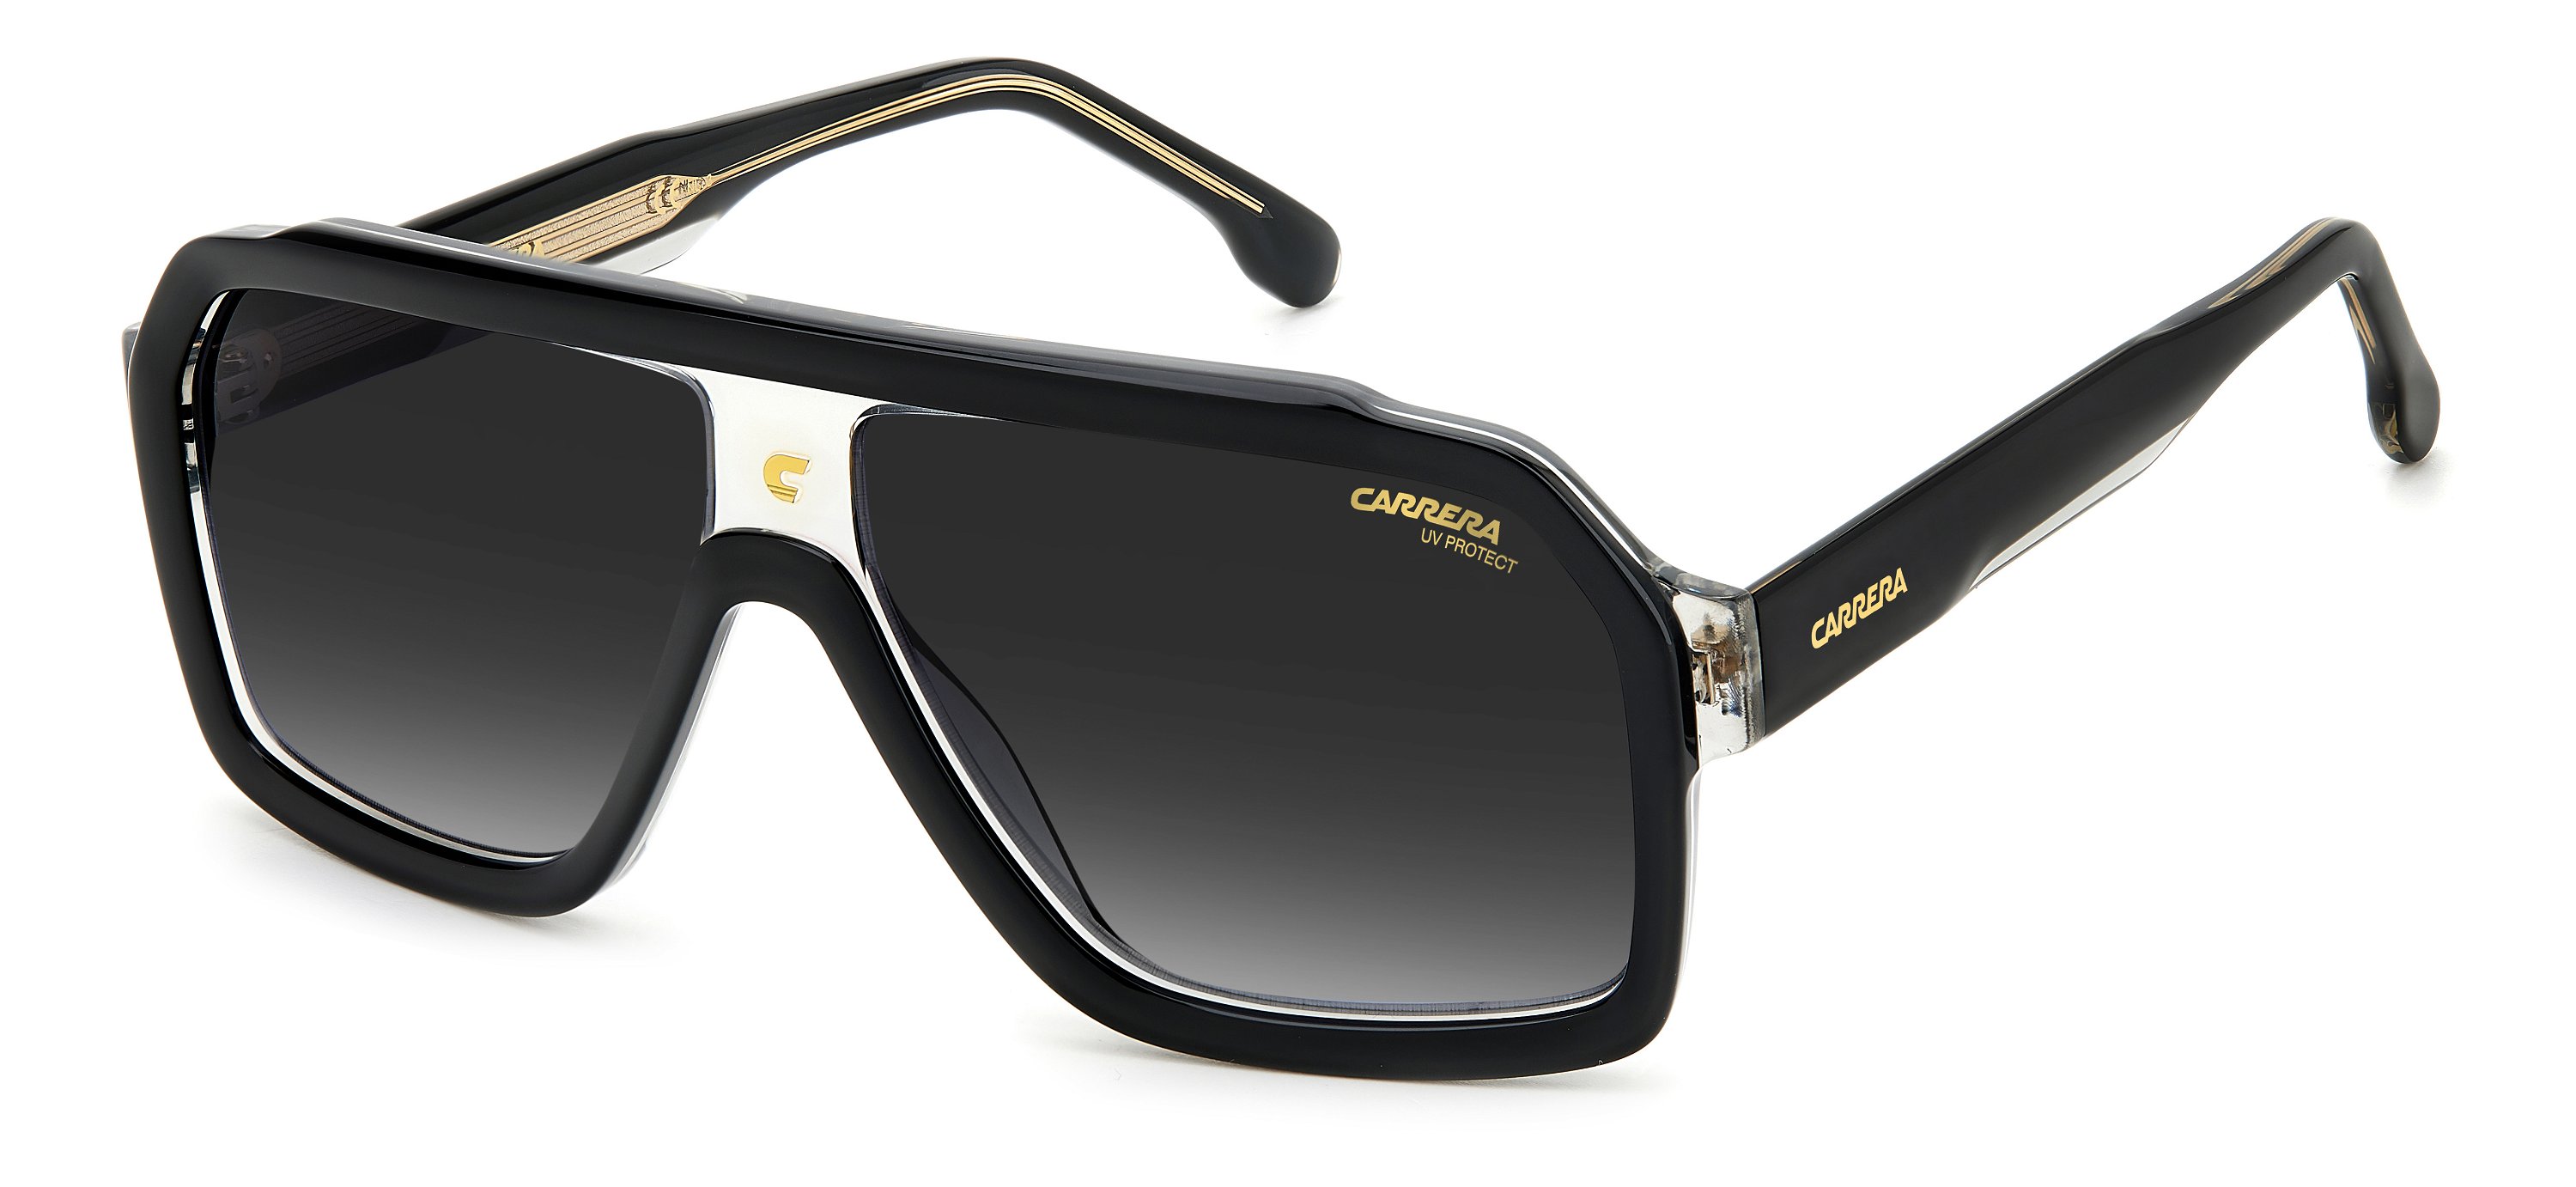 Carrera Sonnenbrille 1053/S 08A schwarz grau